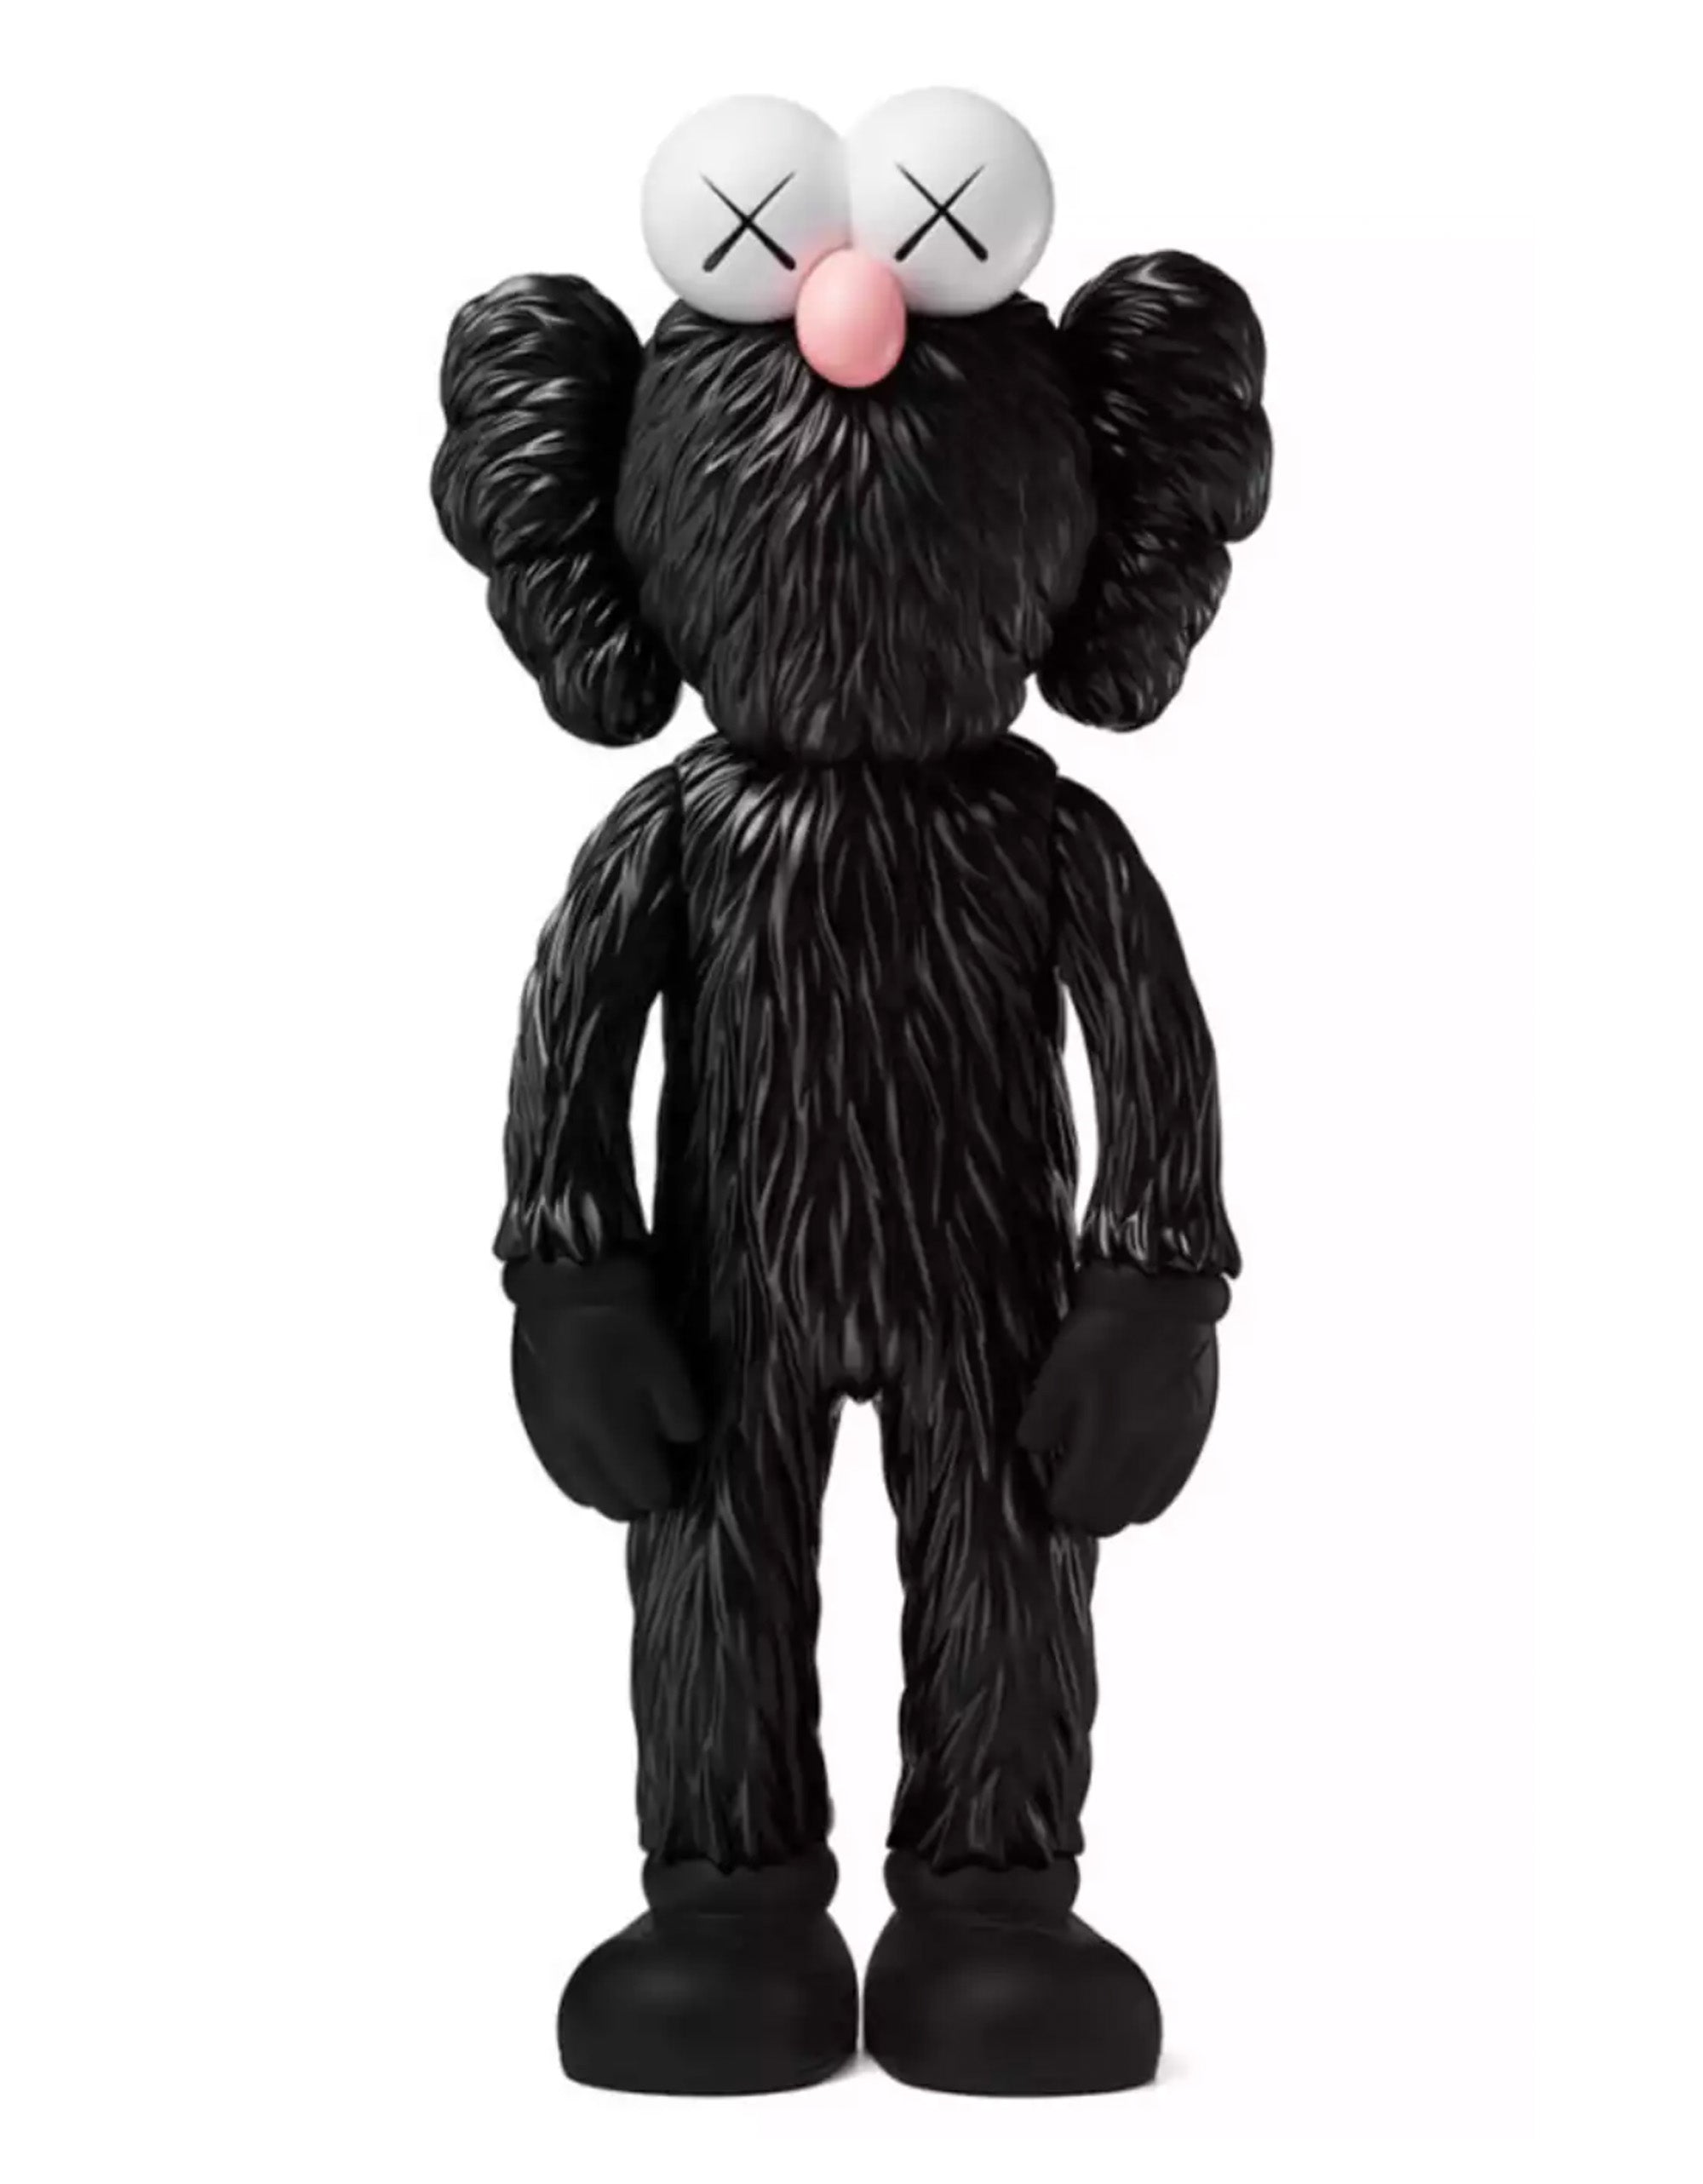 Bff Plush Doll (black) by KAWS